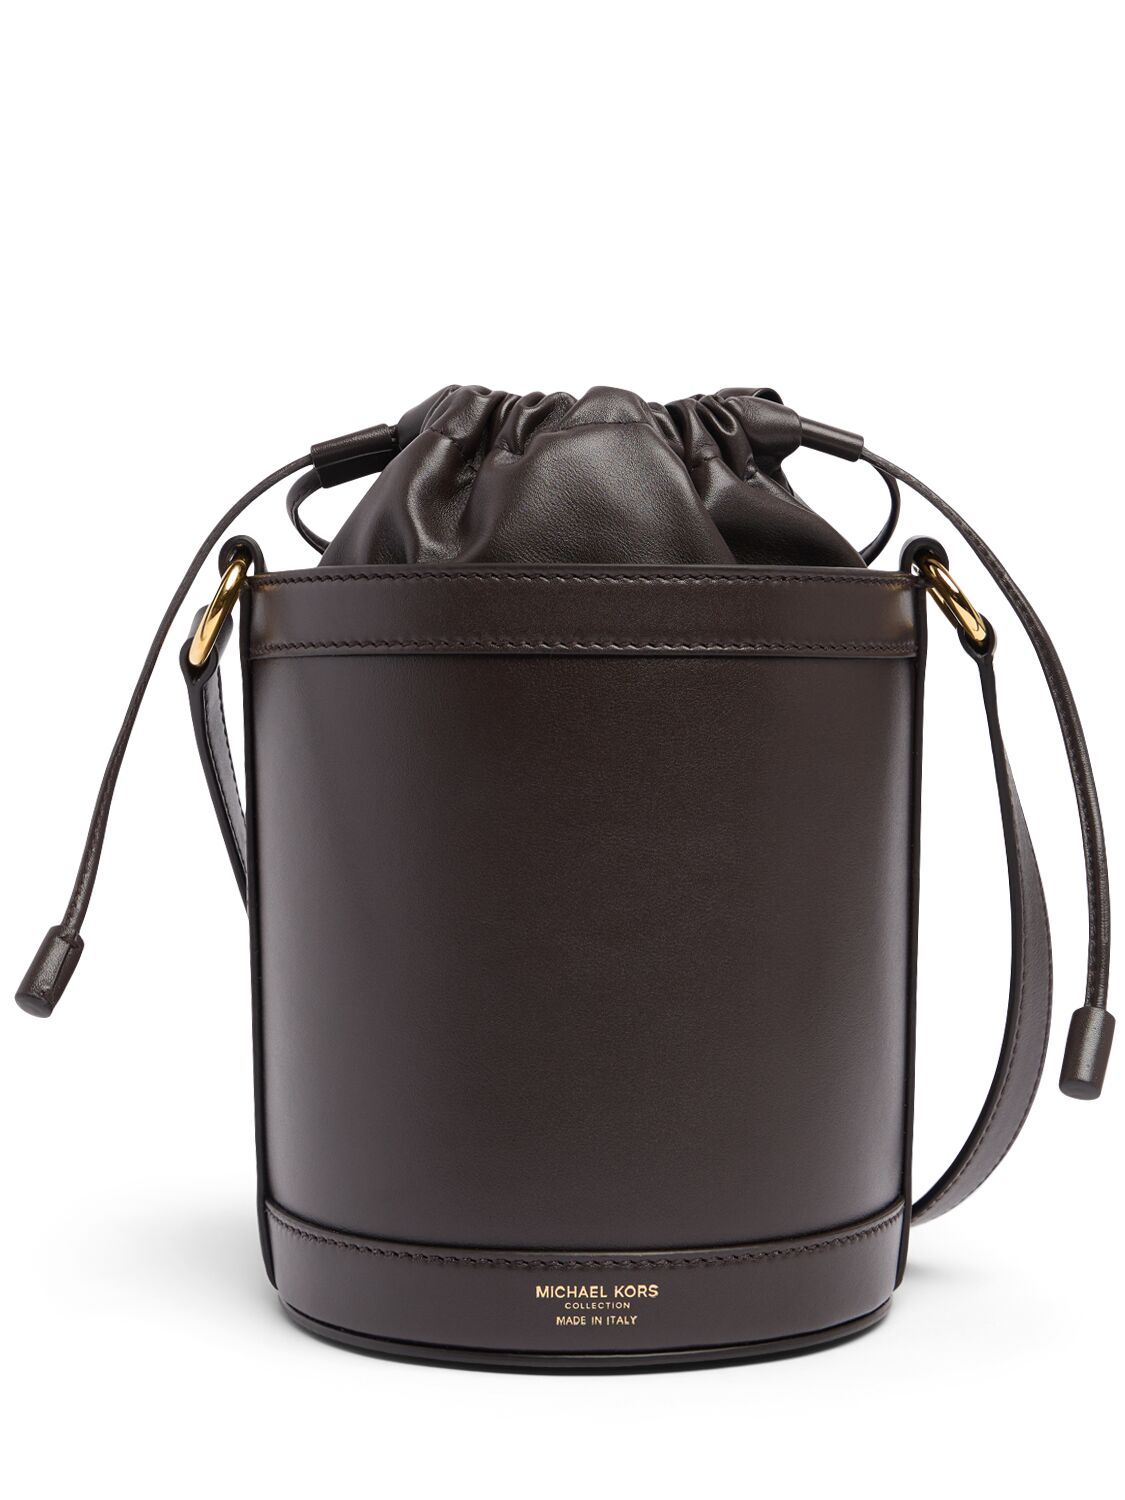 Image of Medium Audrey Leather Bucket Bag